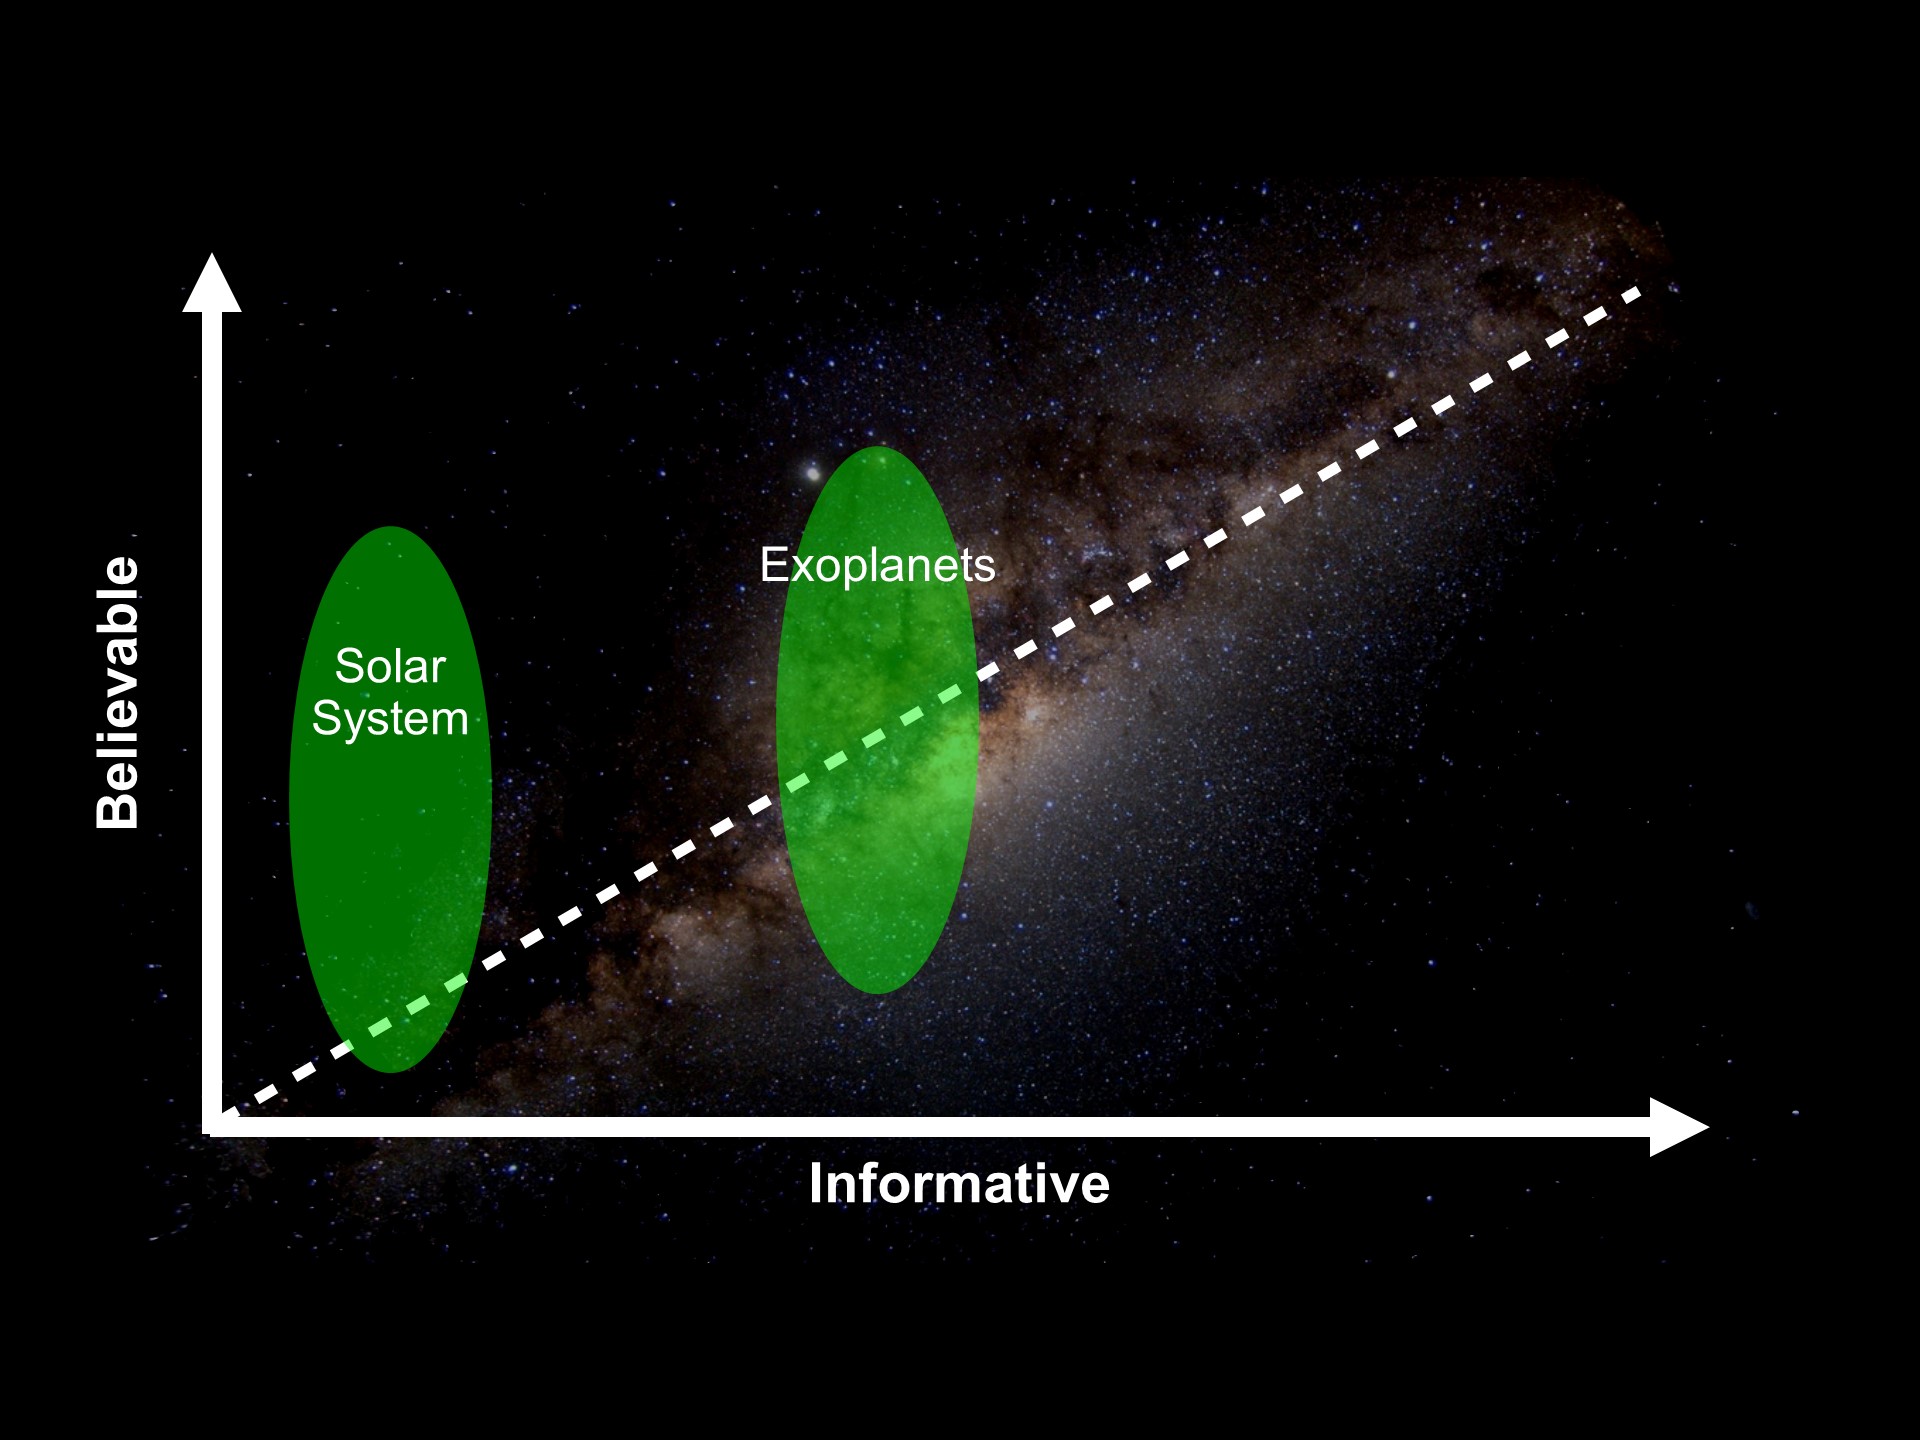 Plot of Believable versus Informative: Exoplanetws